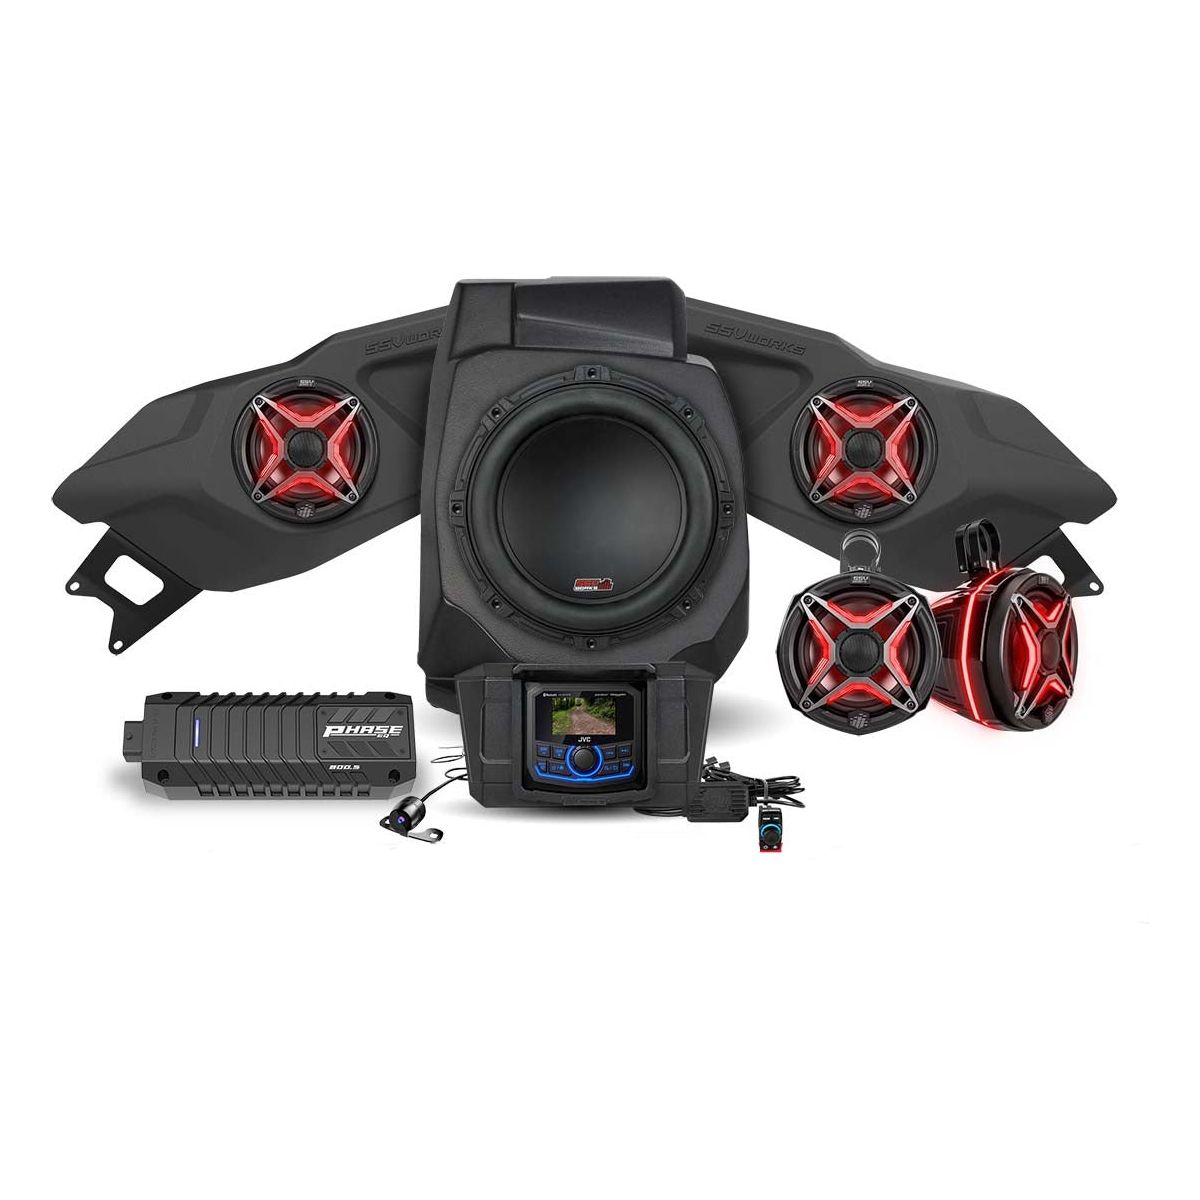 Polaris RZR Pro / Turbo R Lighted 5-Speaker System with Head Unit